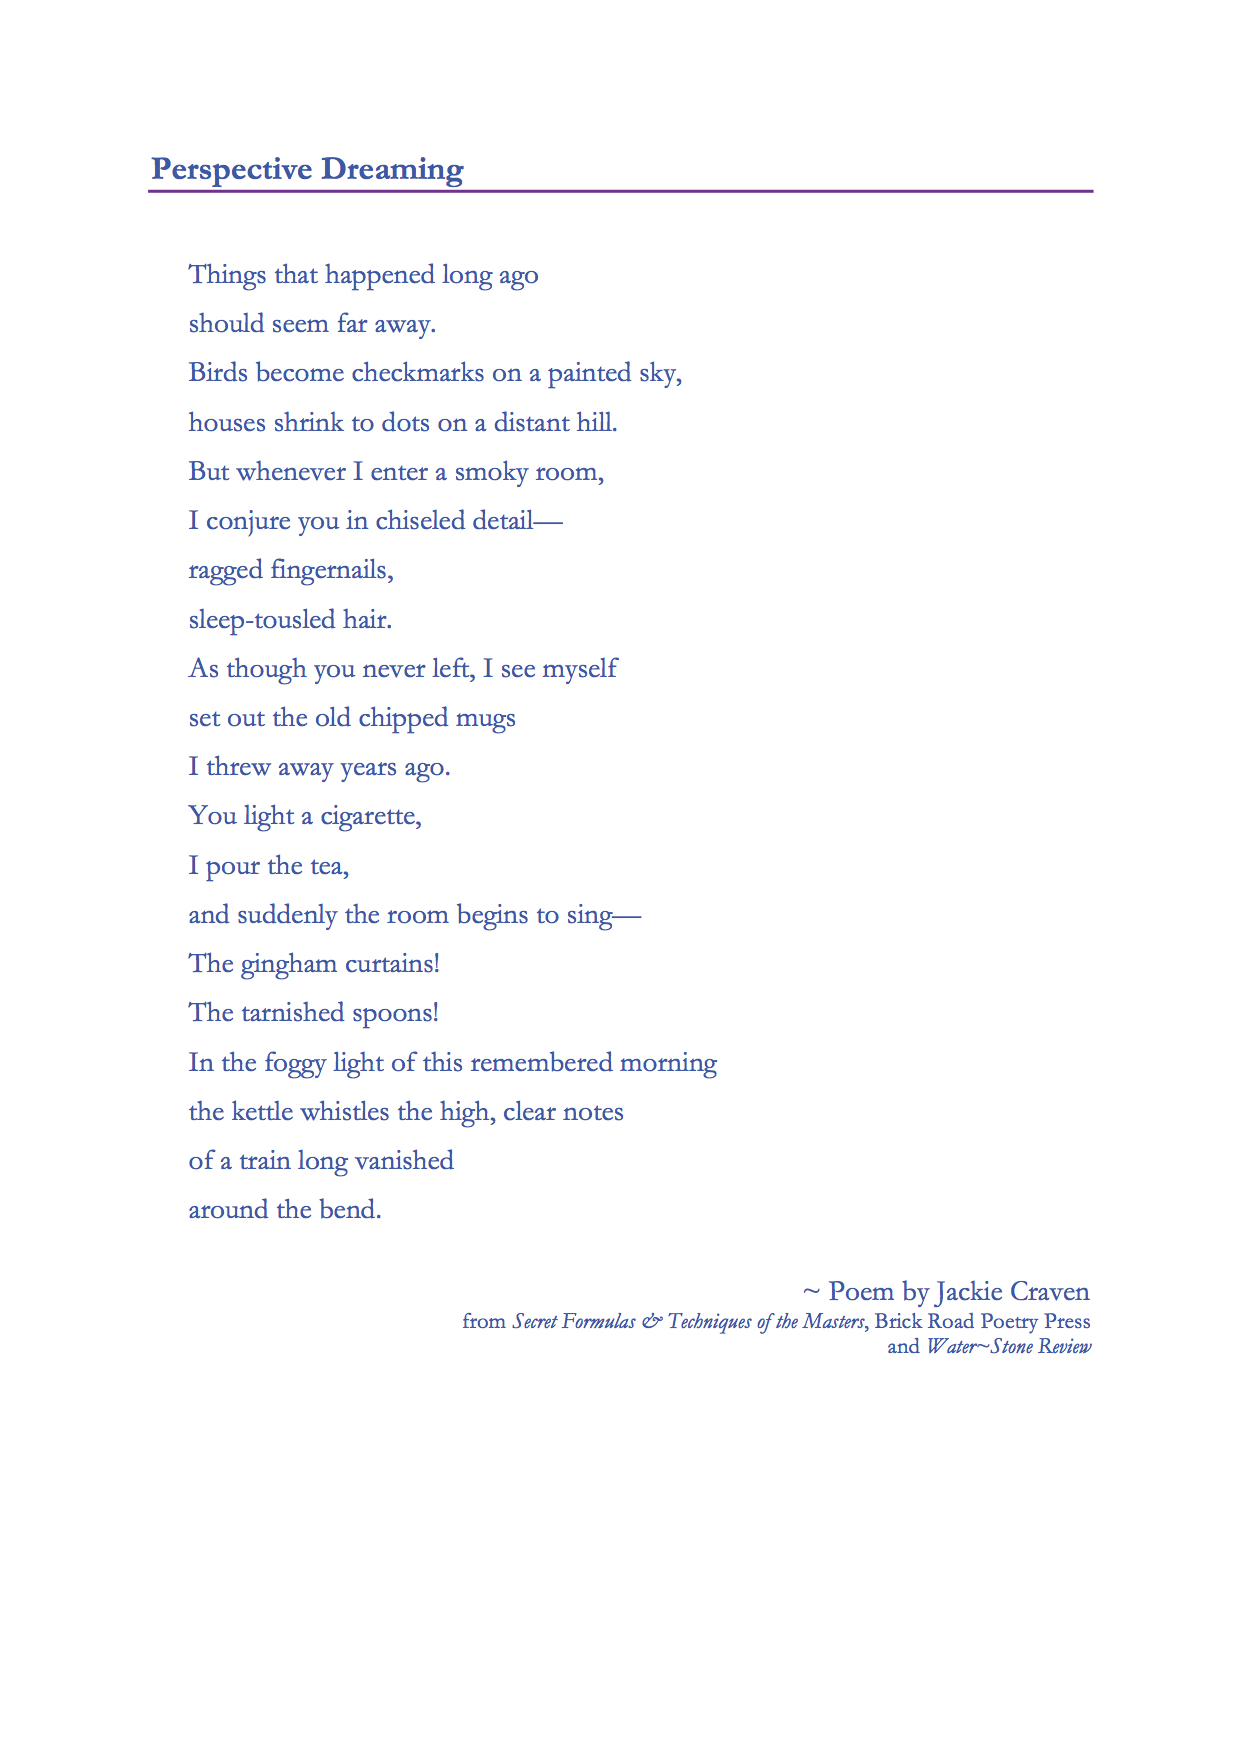 Poem by Jackie Craven